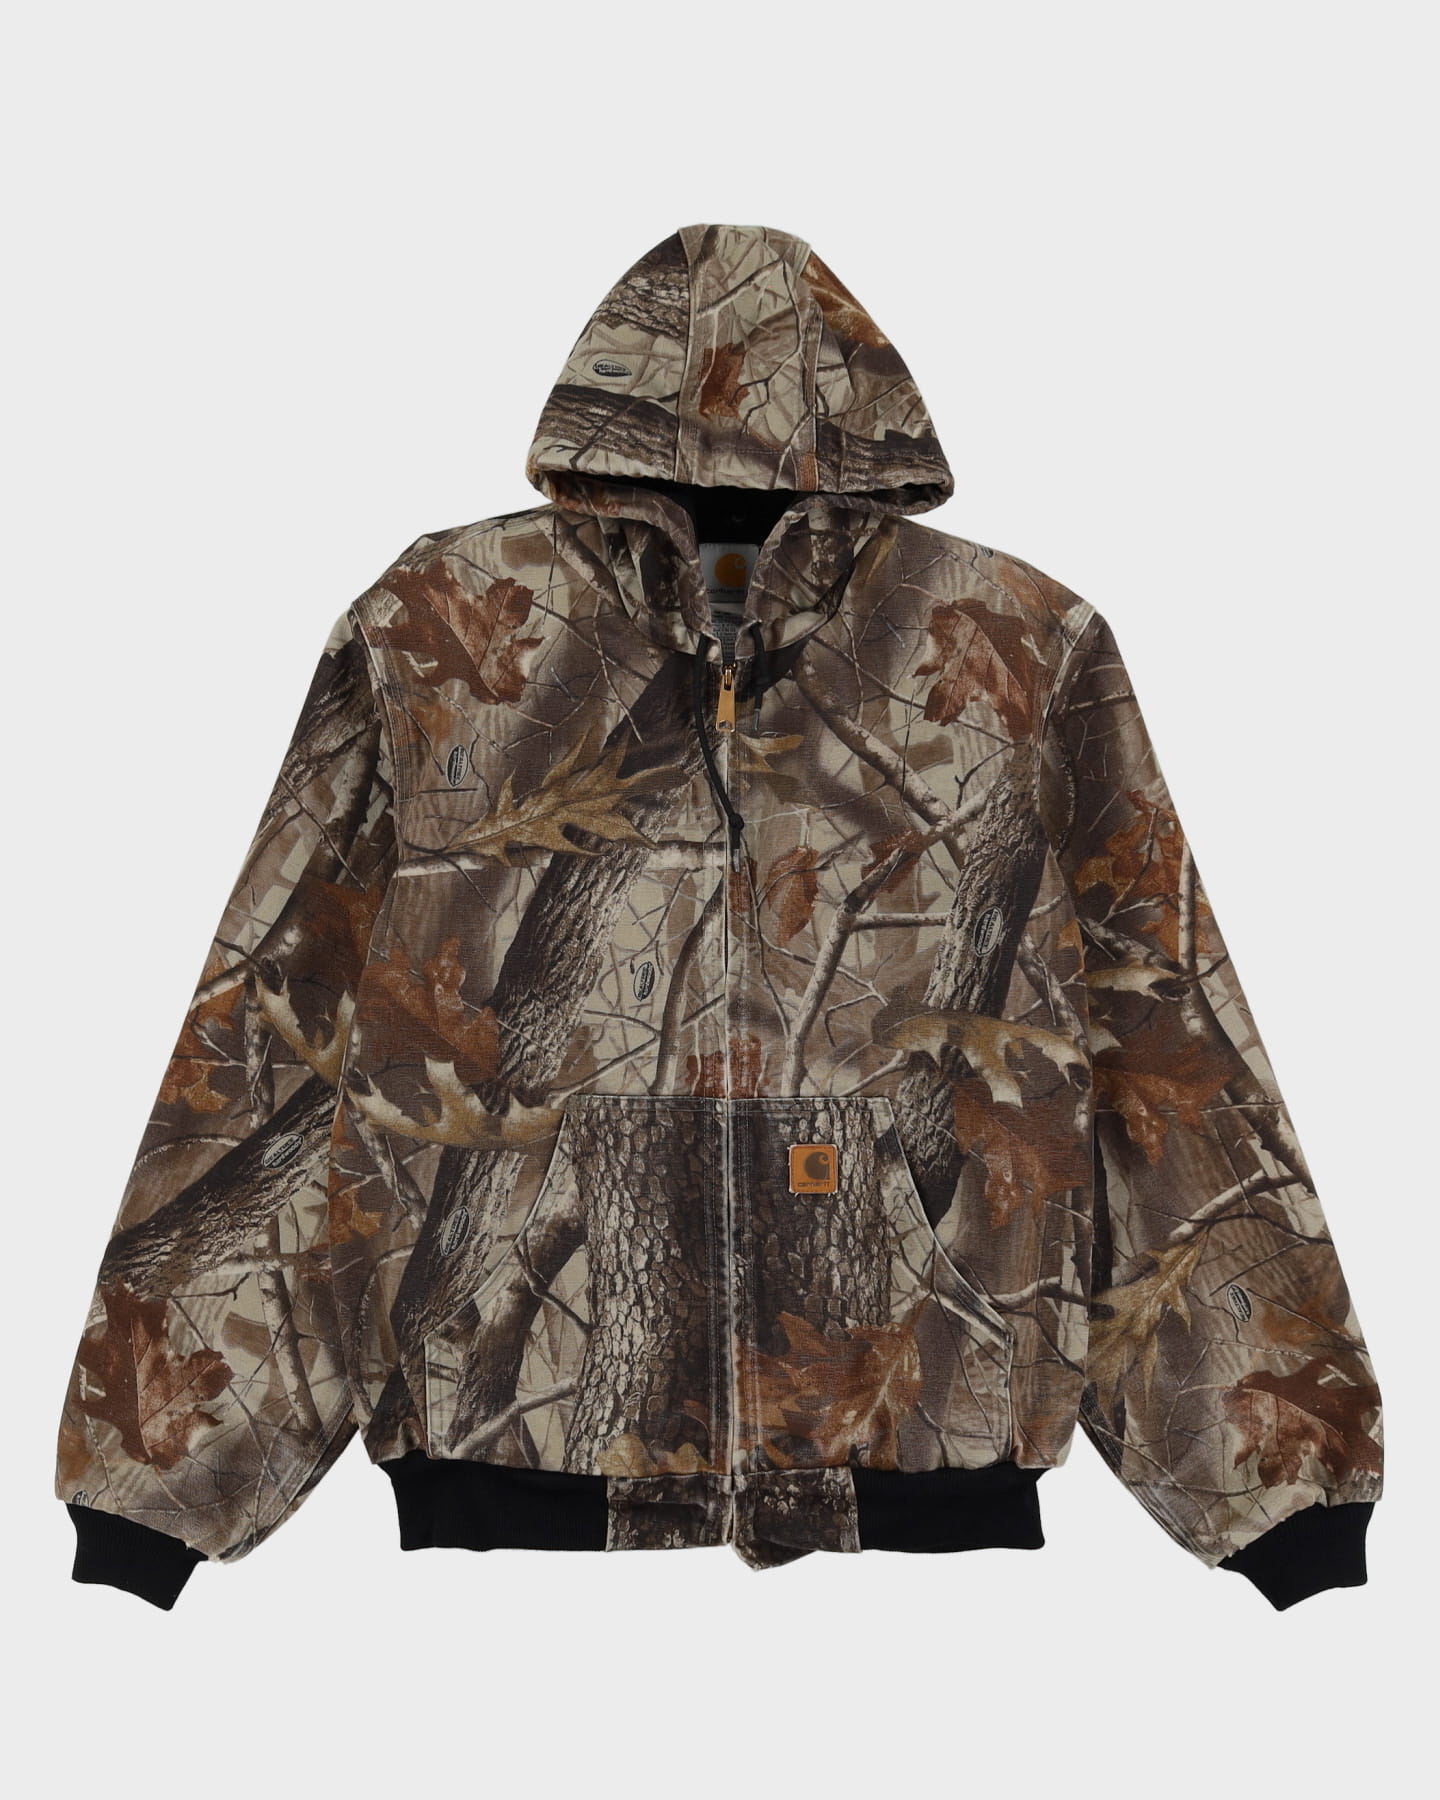 00s Carhartt Camouflage Workwear / Chore Jacket - M